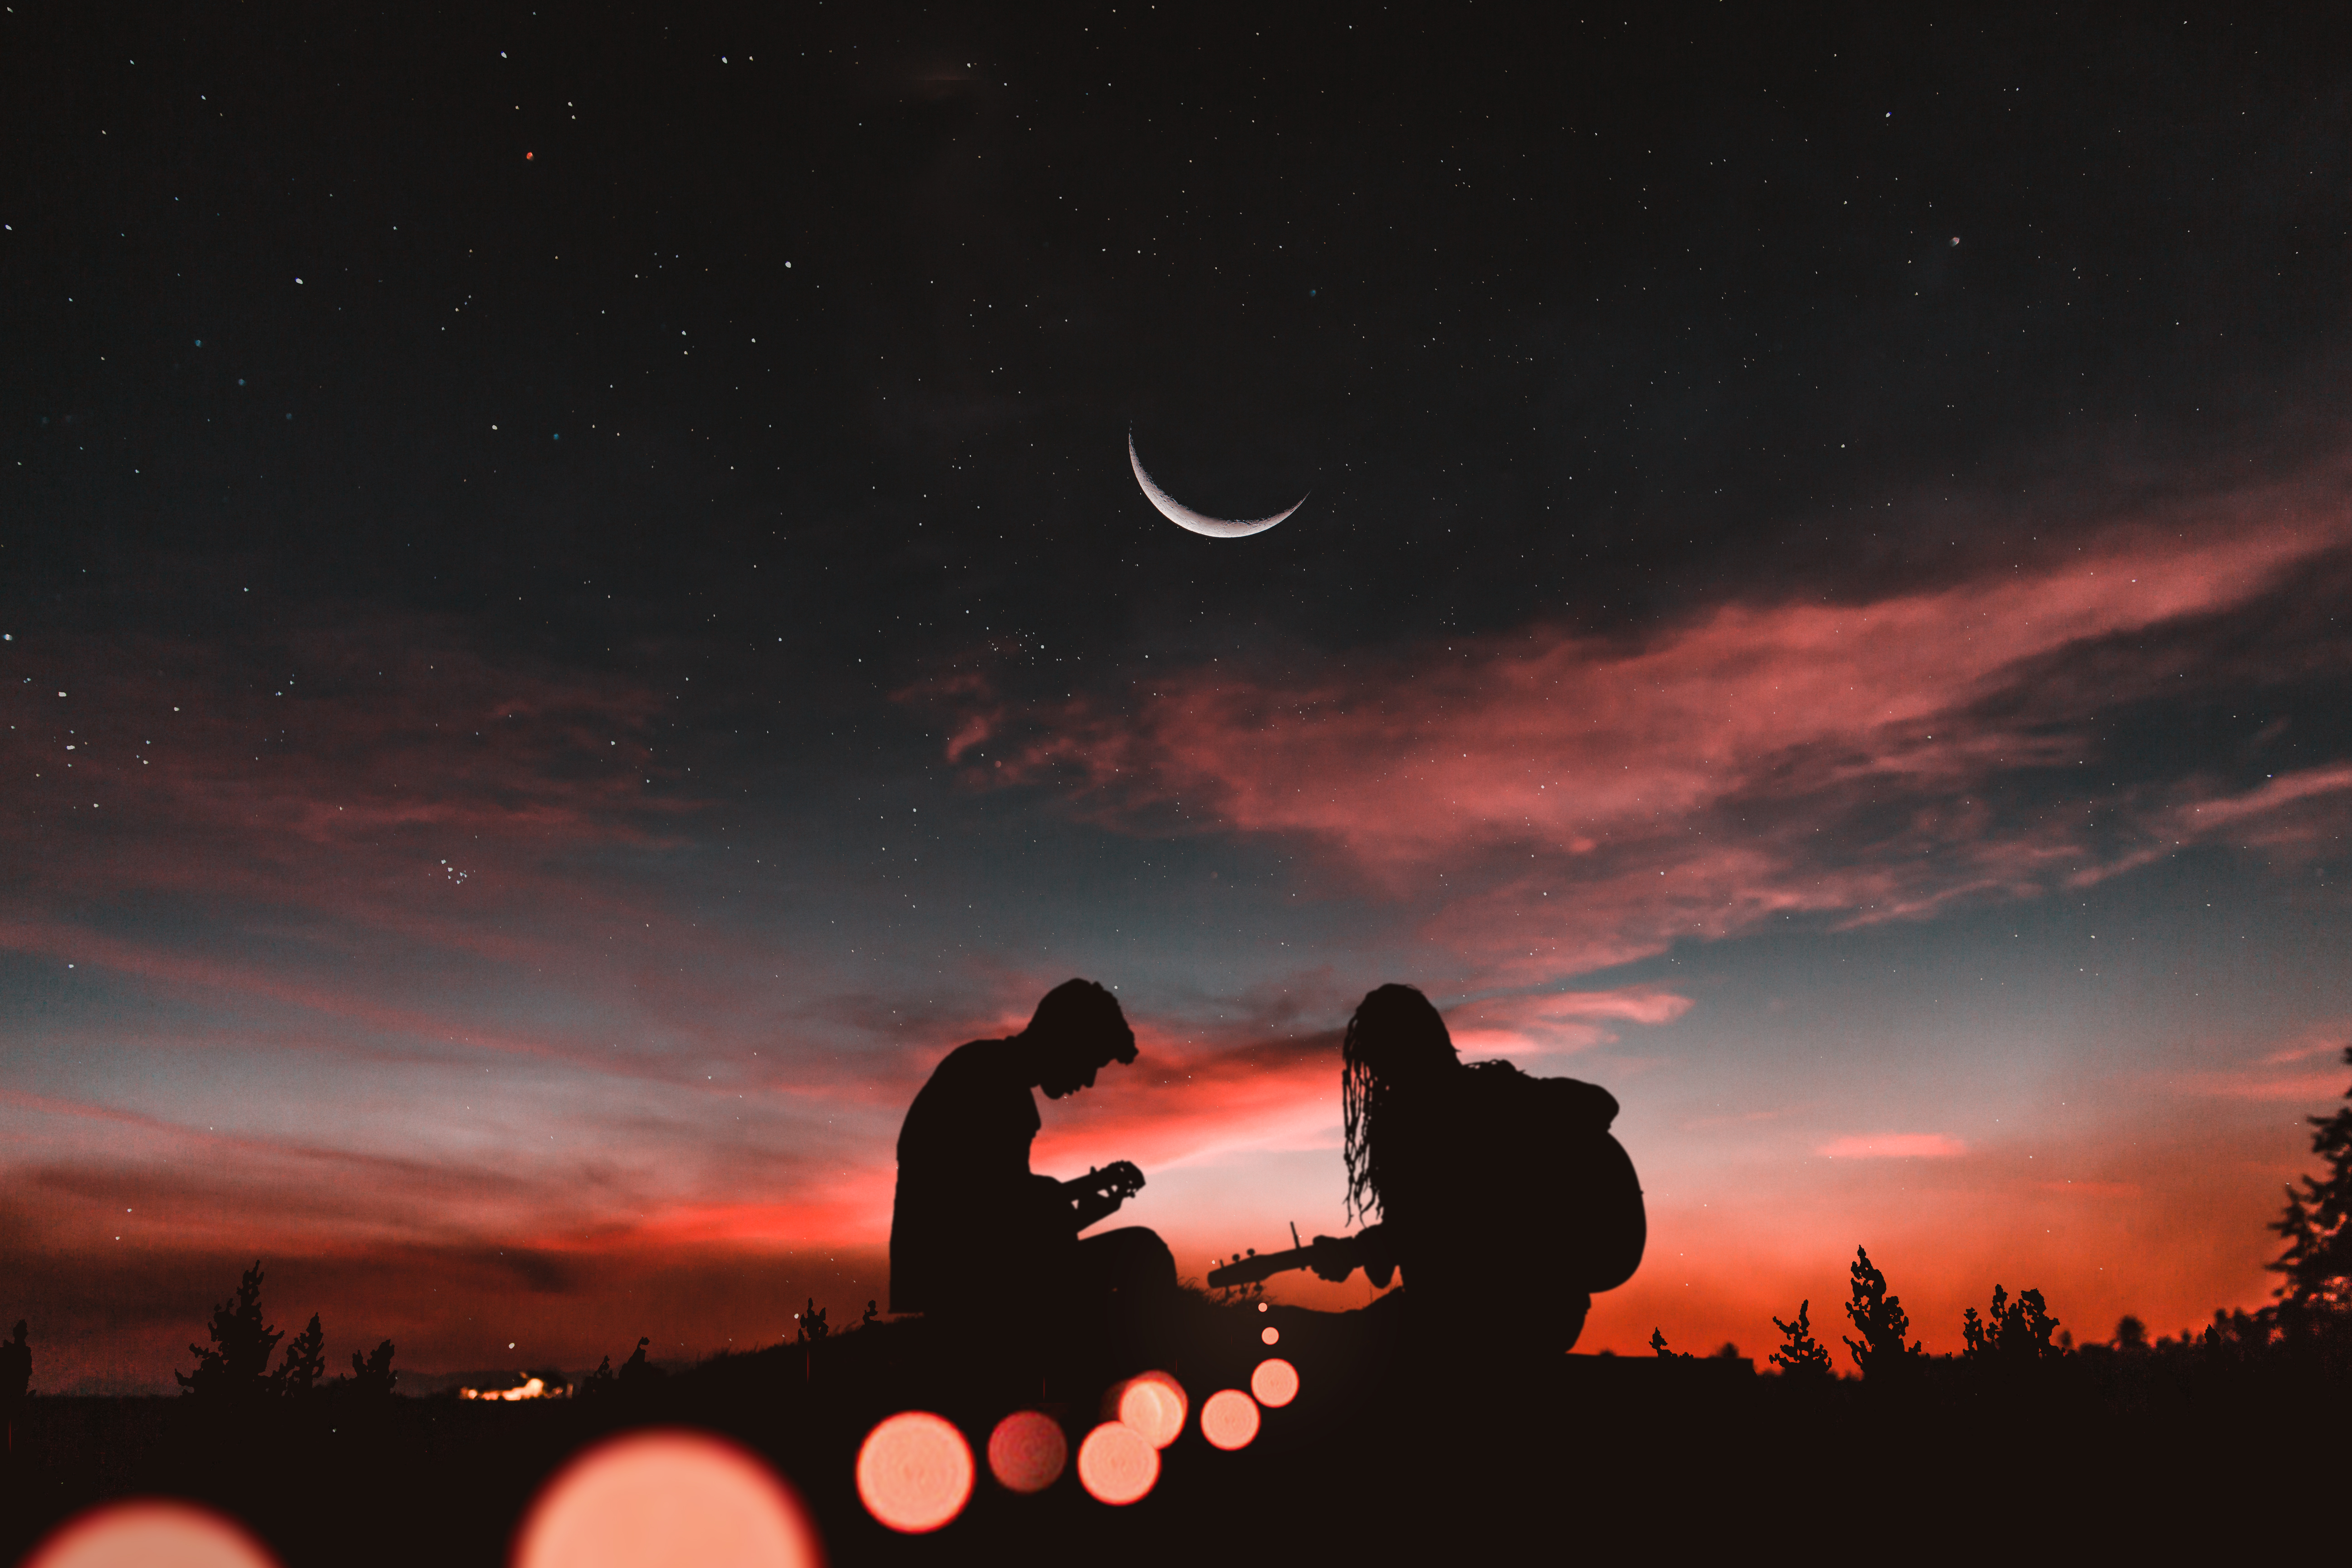 guitar, couple, romance, pair, dark, sunset, silhouettes, starry sky